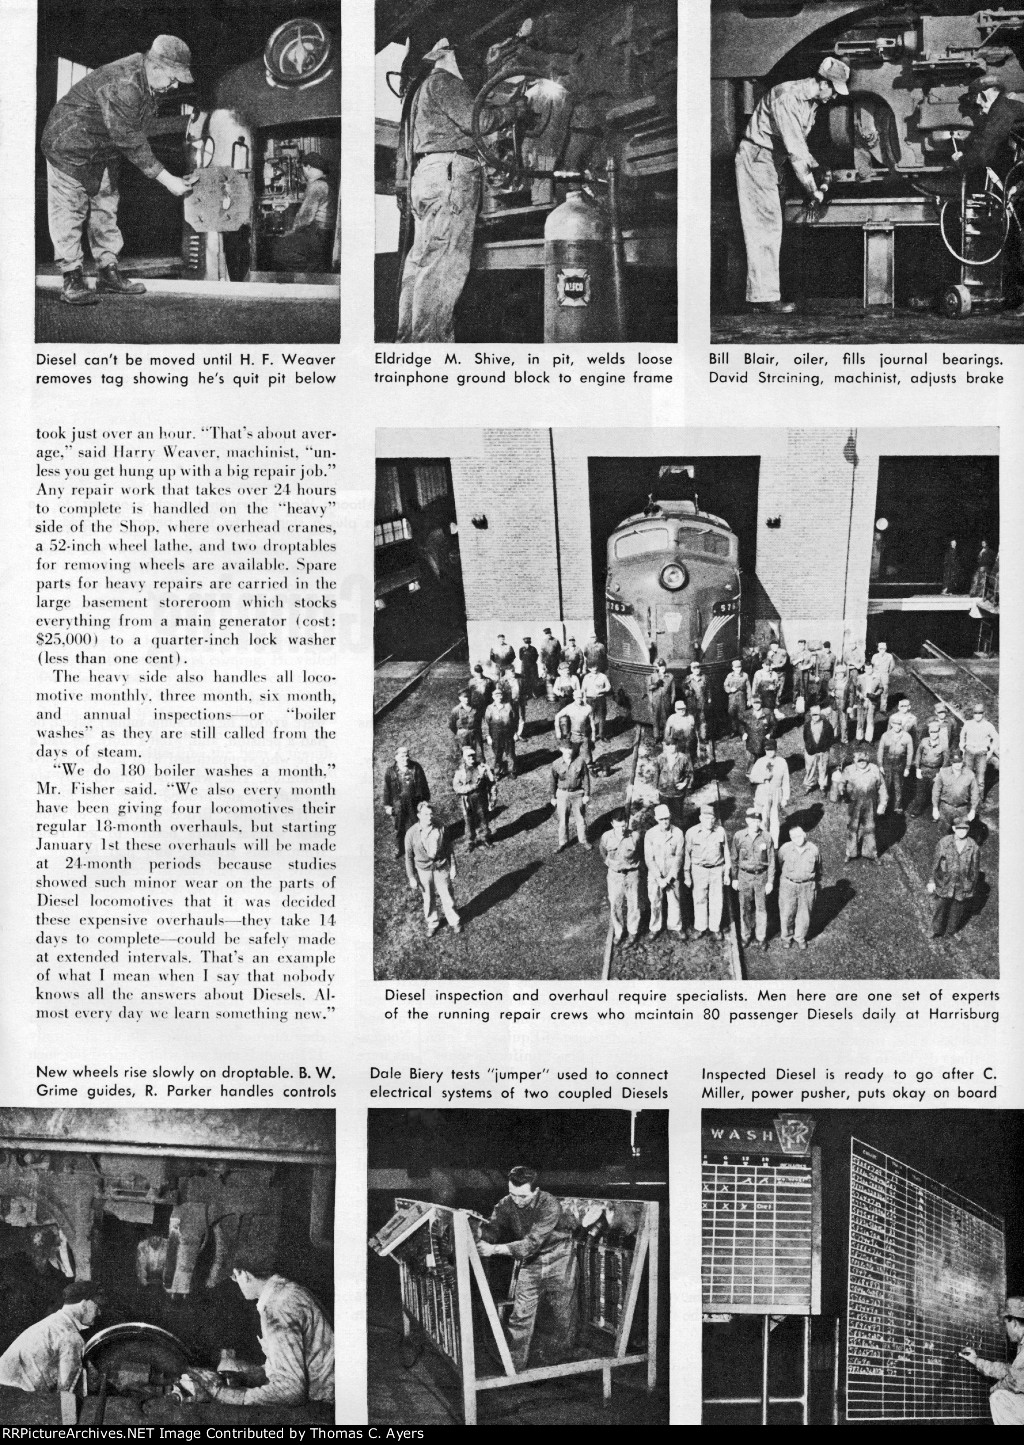 Harrisburg's Diesel Specialists, Page 9, 1953